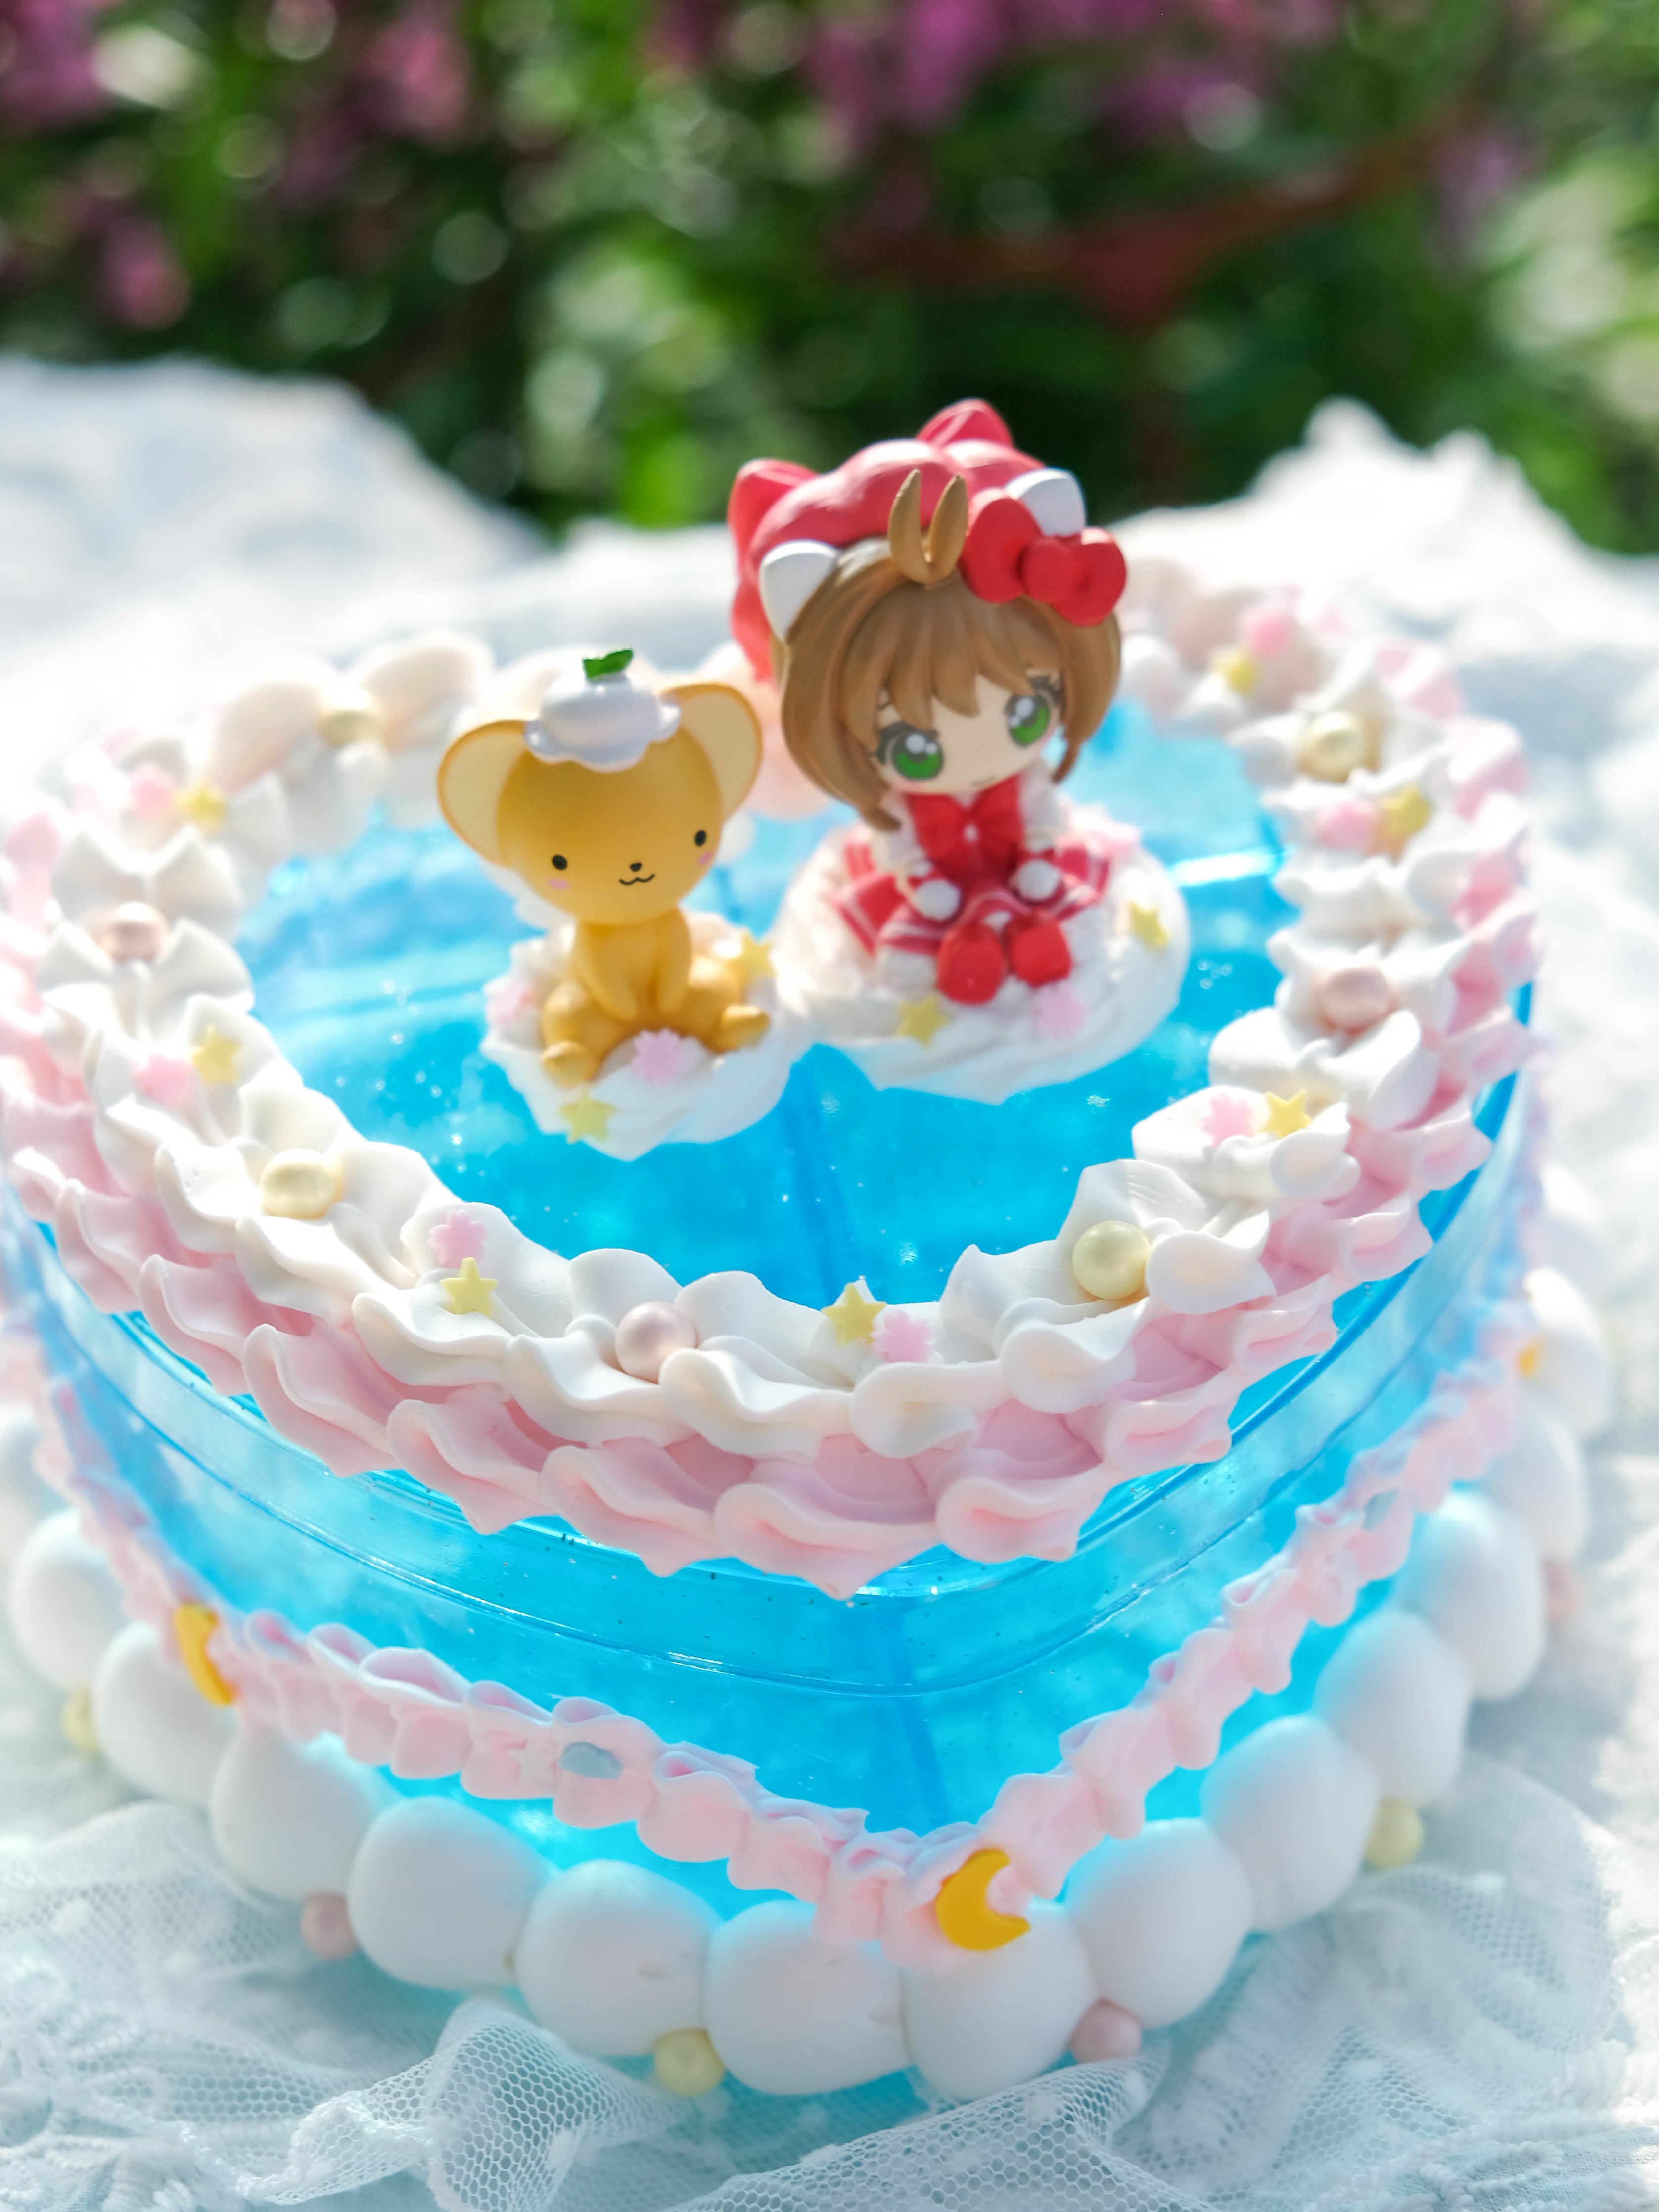 Card Captor Sakura Doll Cake Topper